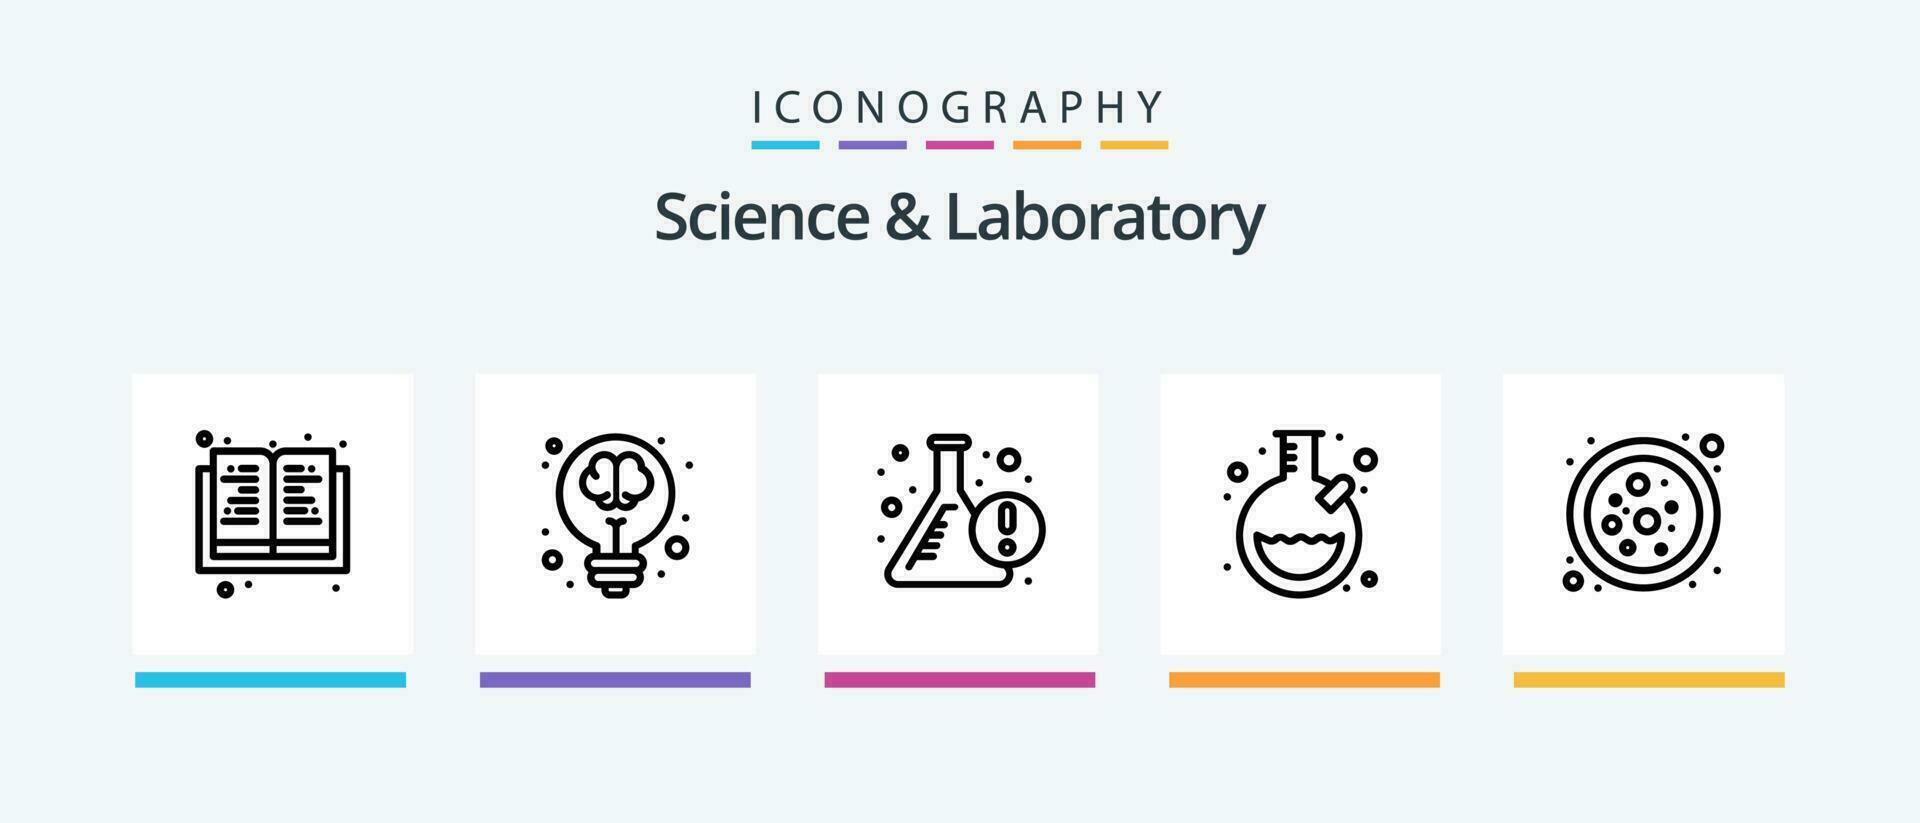 science ligne 5 icône pack comprenant tube. laboratoire. tester tube. engrenage. virus. Créatif Icônes conception vecteur